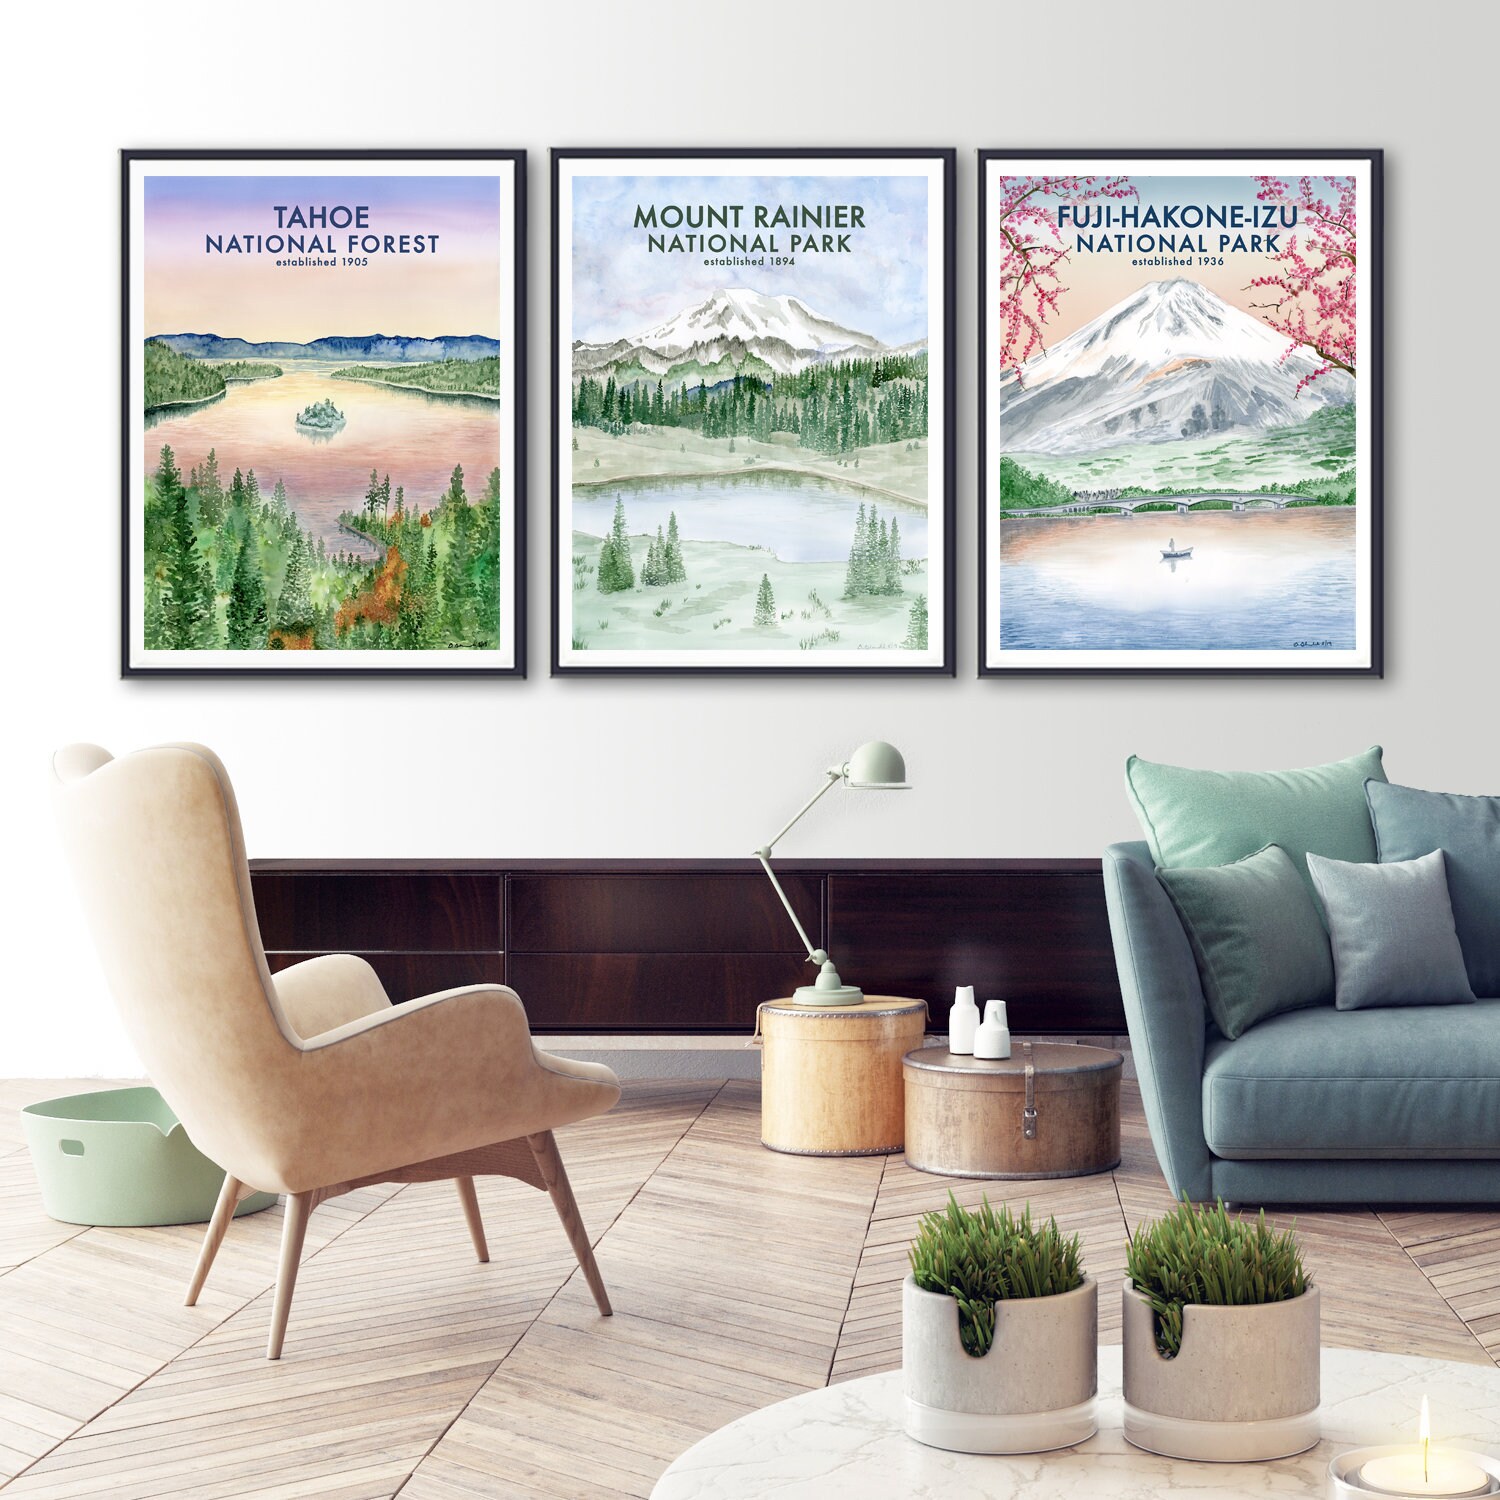 Mount Fuji National Park Travel Poster Fuji-hakone-izu Park | Etsy